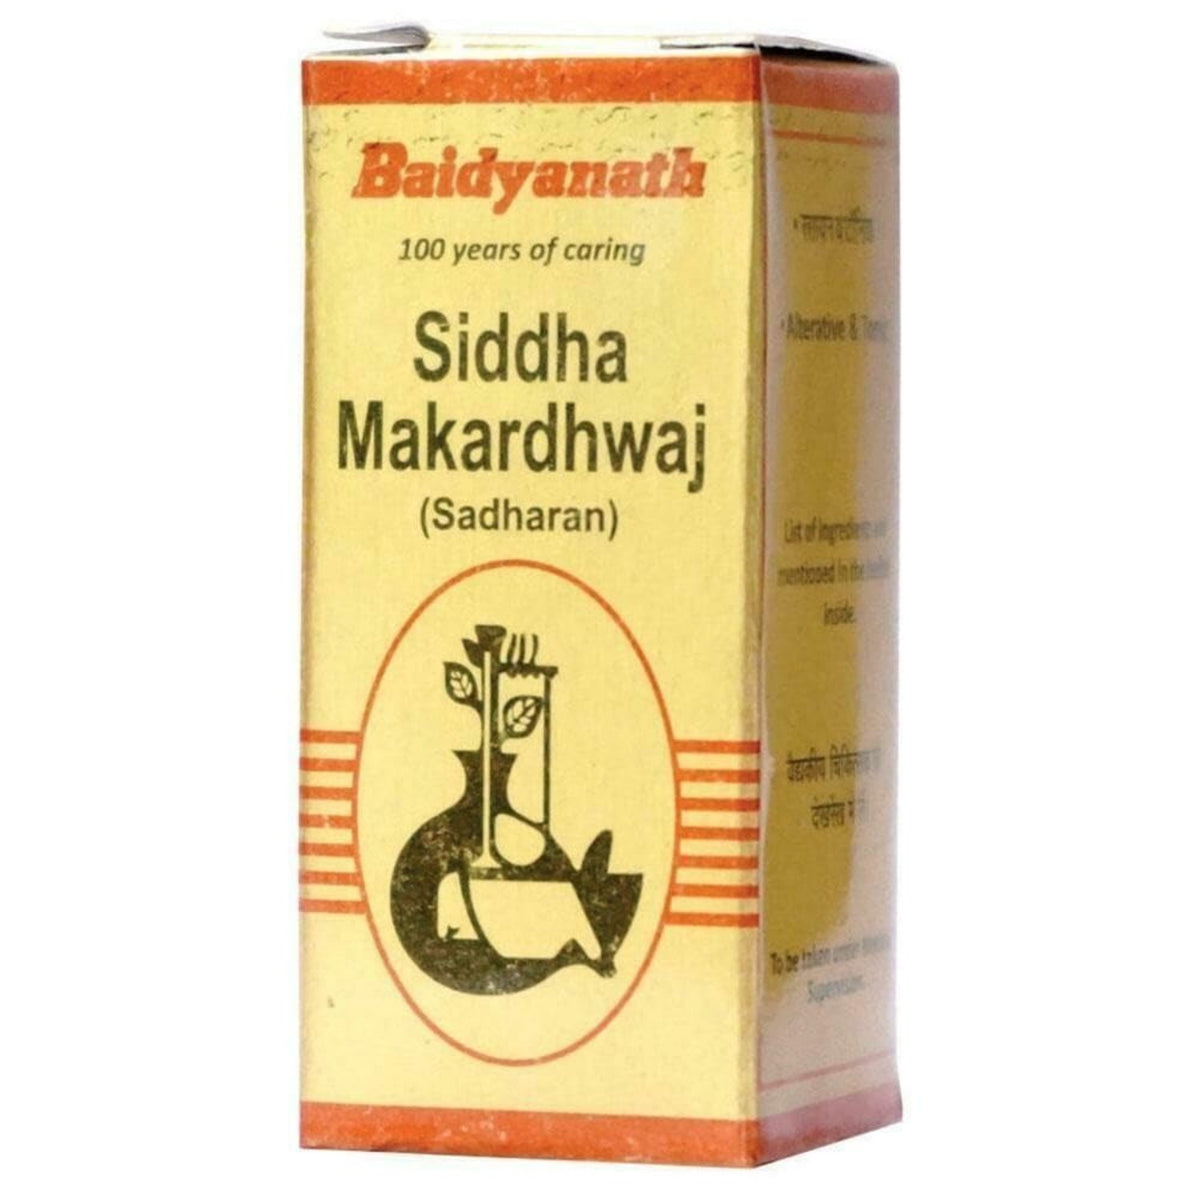 Baidyanath Ayurvedisches Siddha Makardhwaj (Sadharan) Pulver